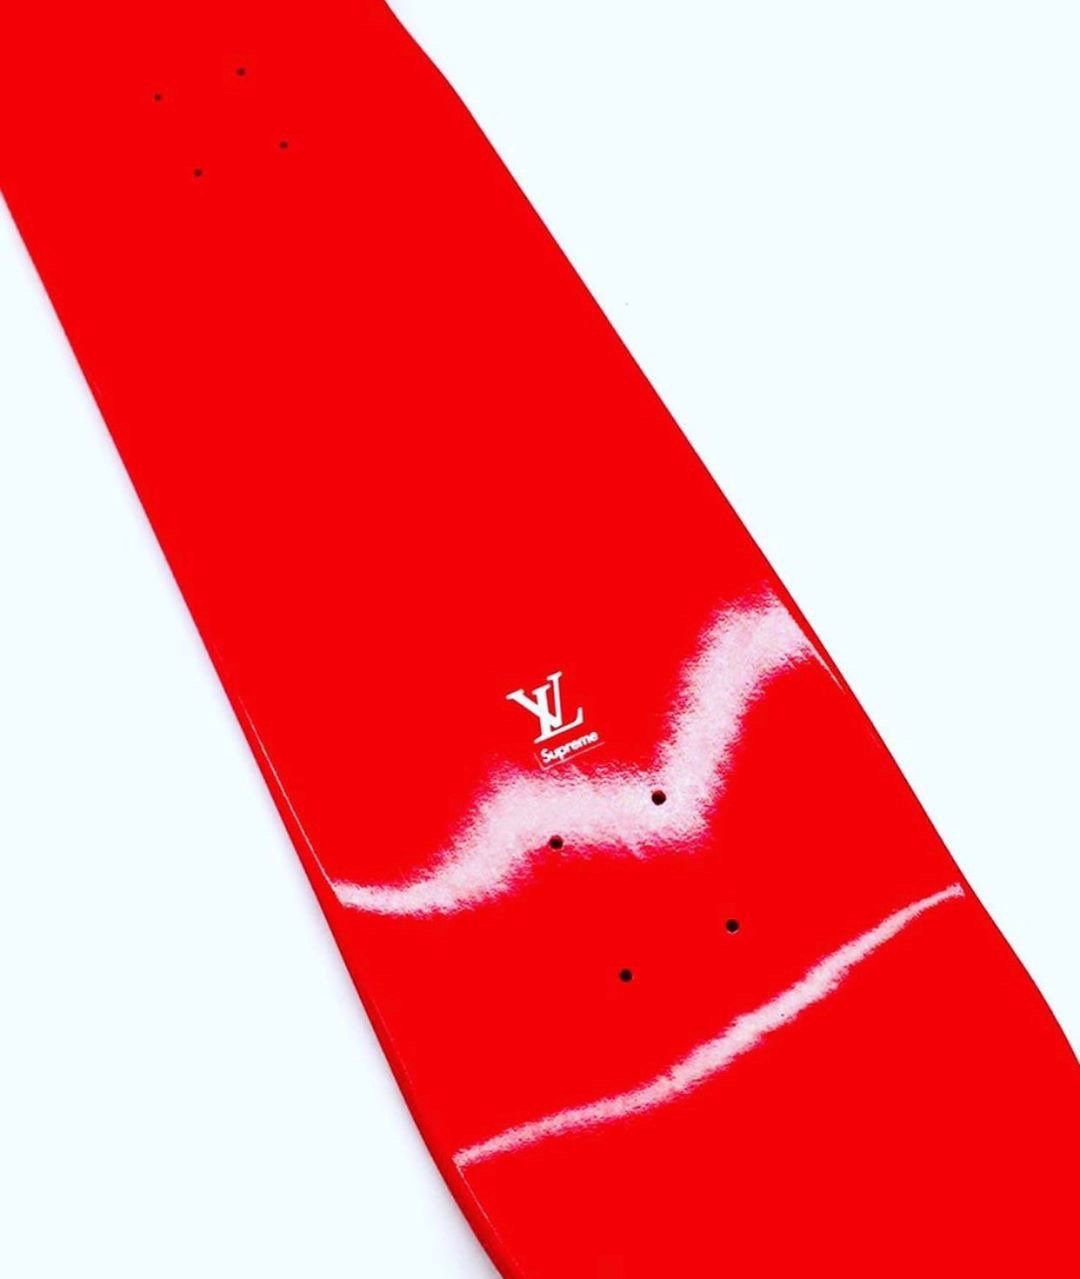 Louis Vuitton Supreme Skateboard Trunk